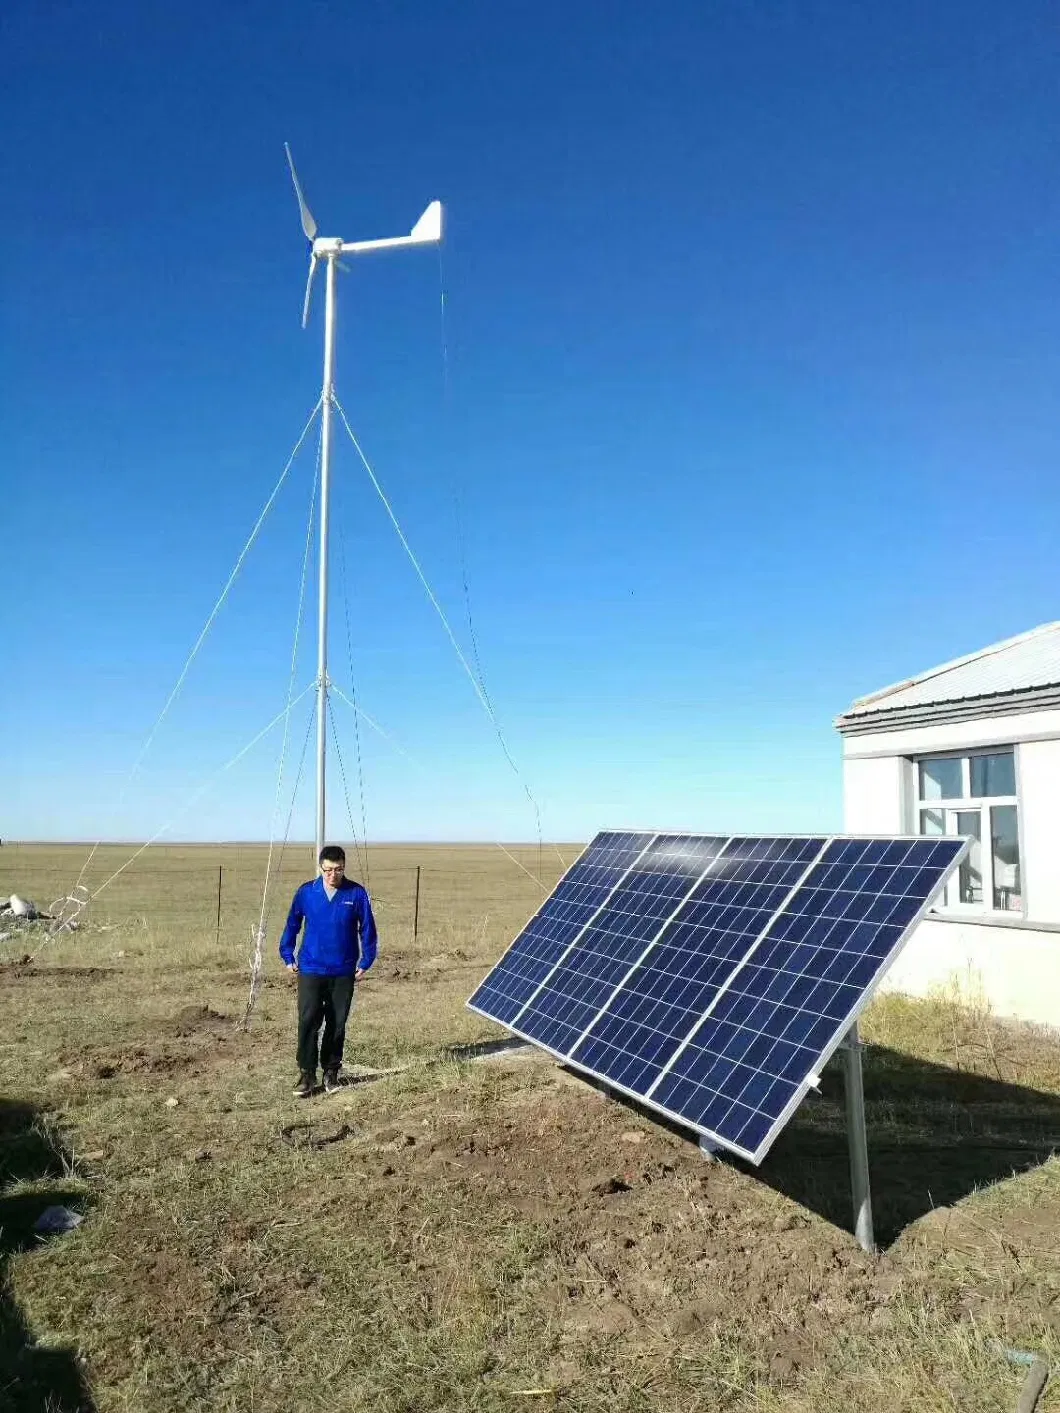 4kw Wind Solar Hybrid Power 3kw Solar 1kw Wind off Grid System for Rural No Grid Power Homes